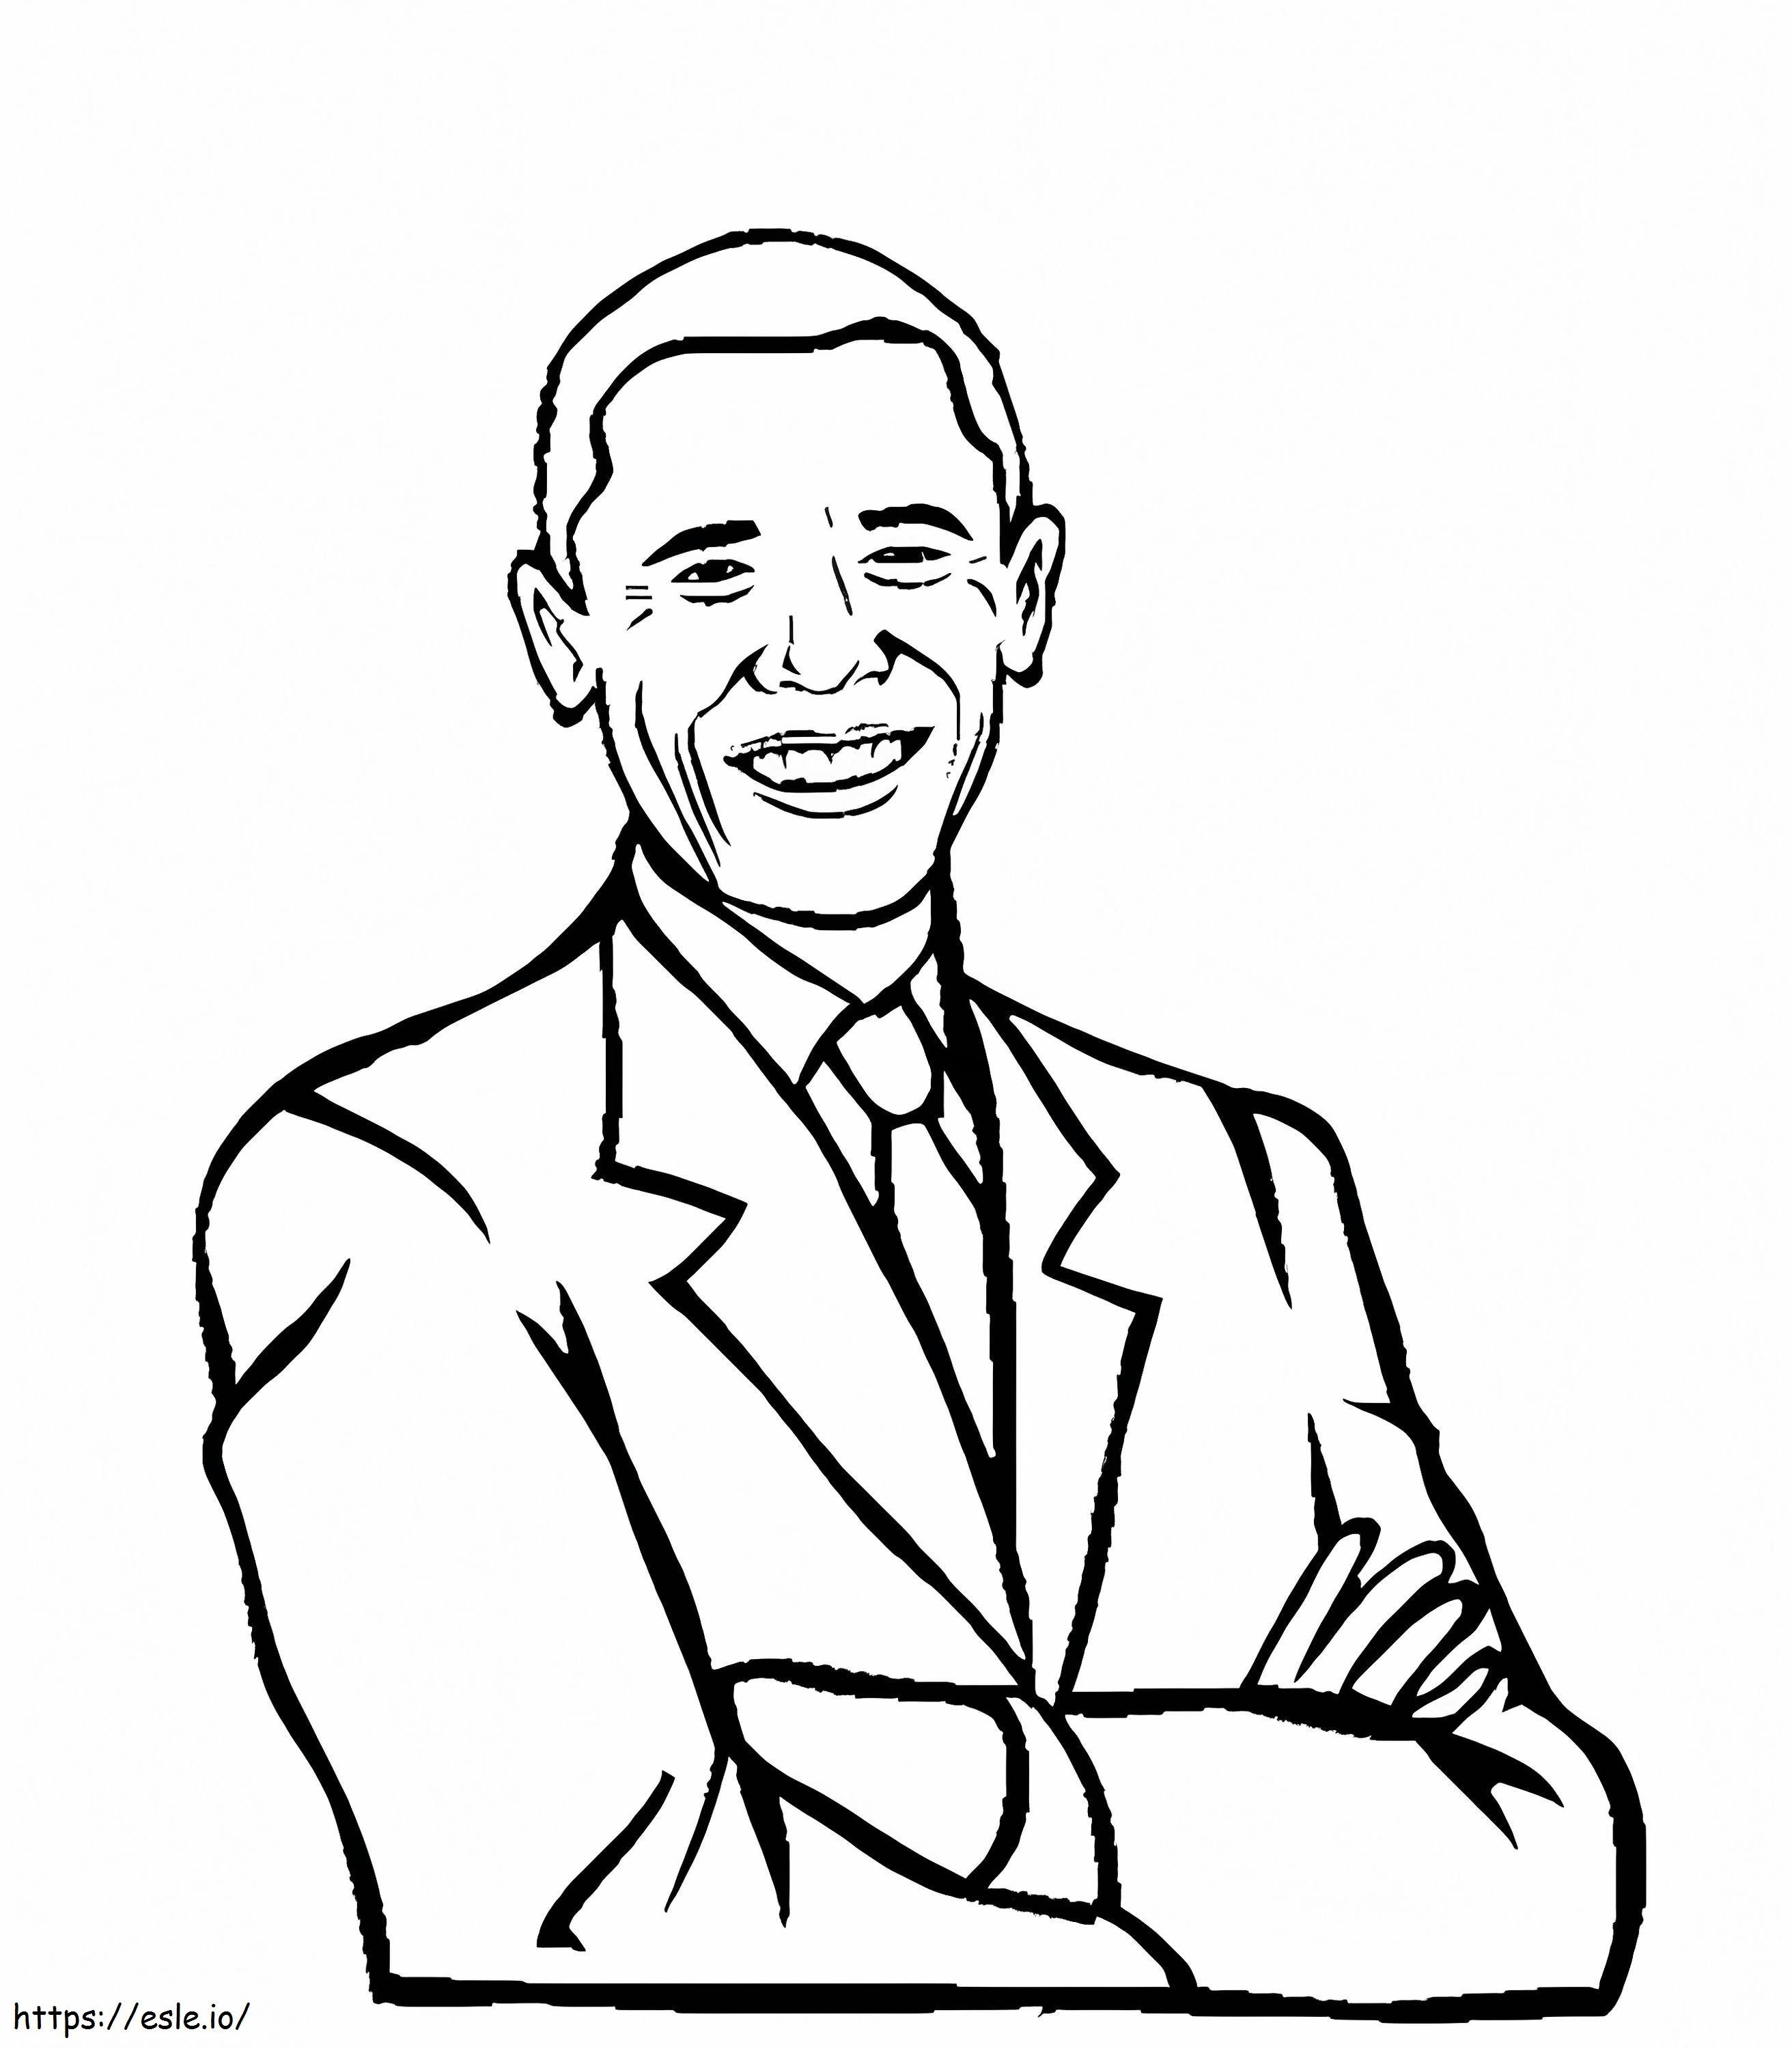 Lustiger Obama ausmalbilder